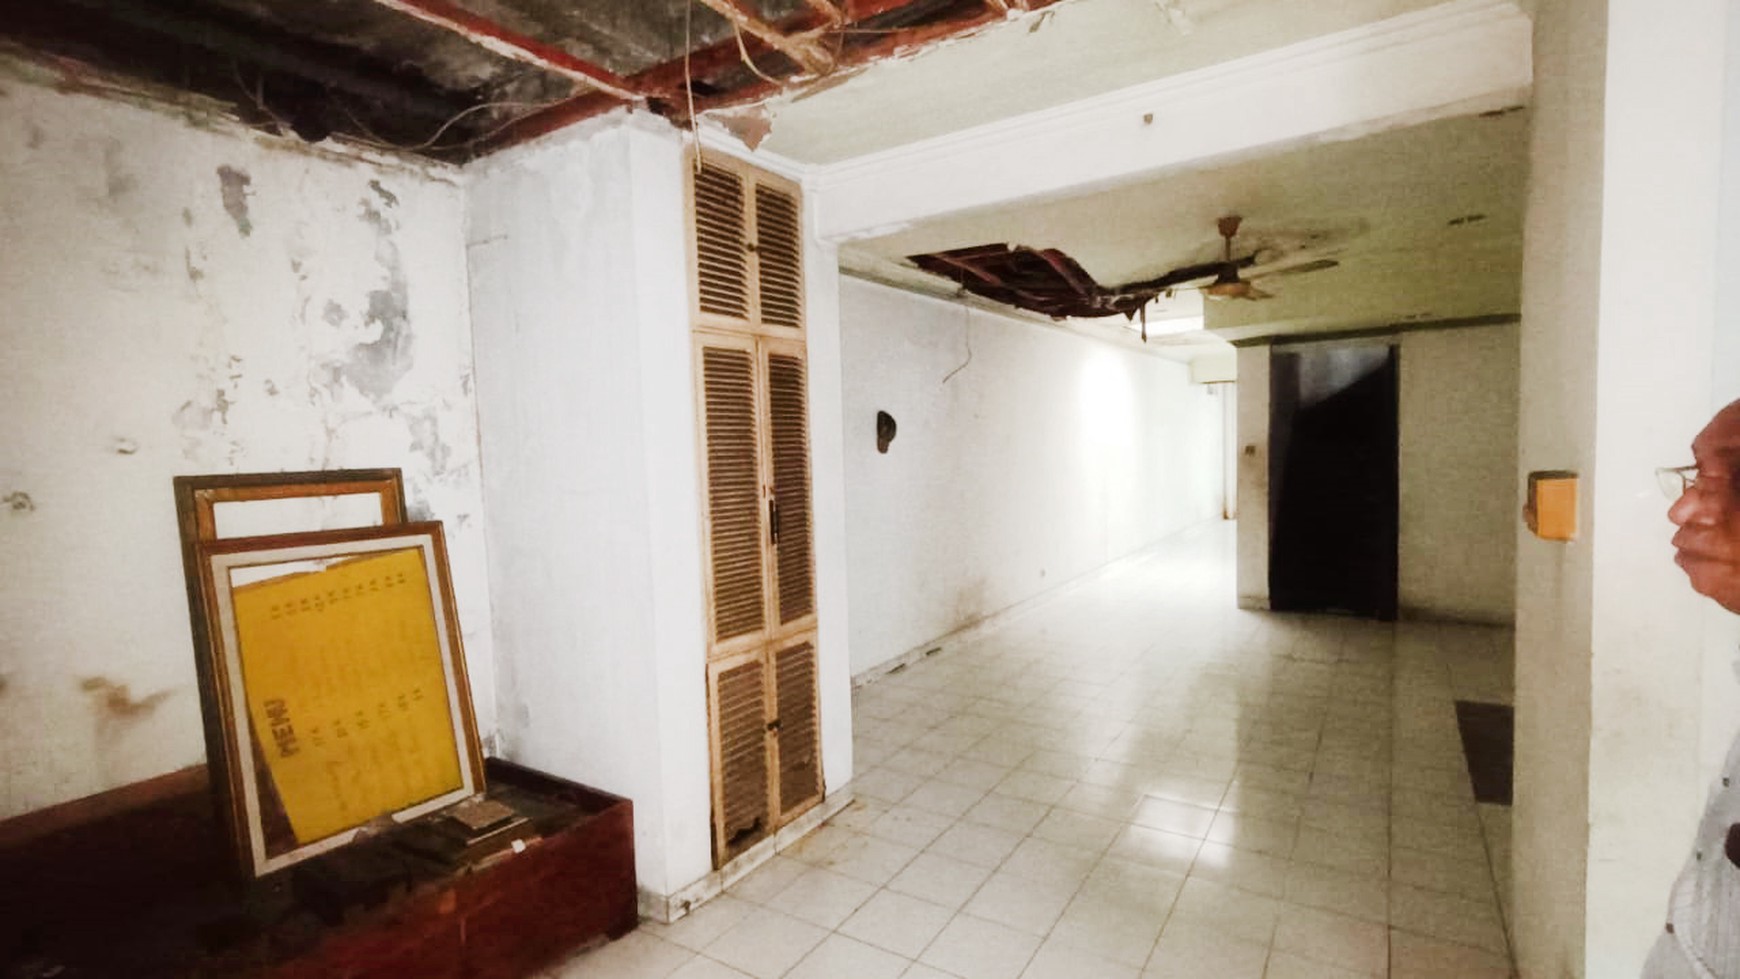 Rumah  Hitung Tanah Di Jl Pemuda Rawamangun Jakarta Timur